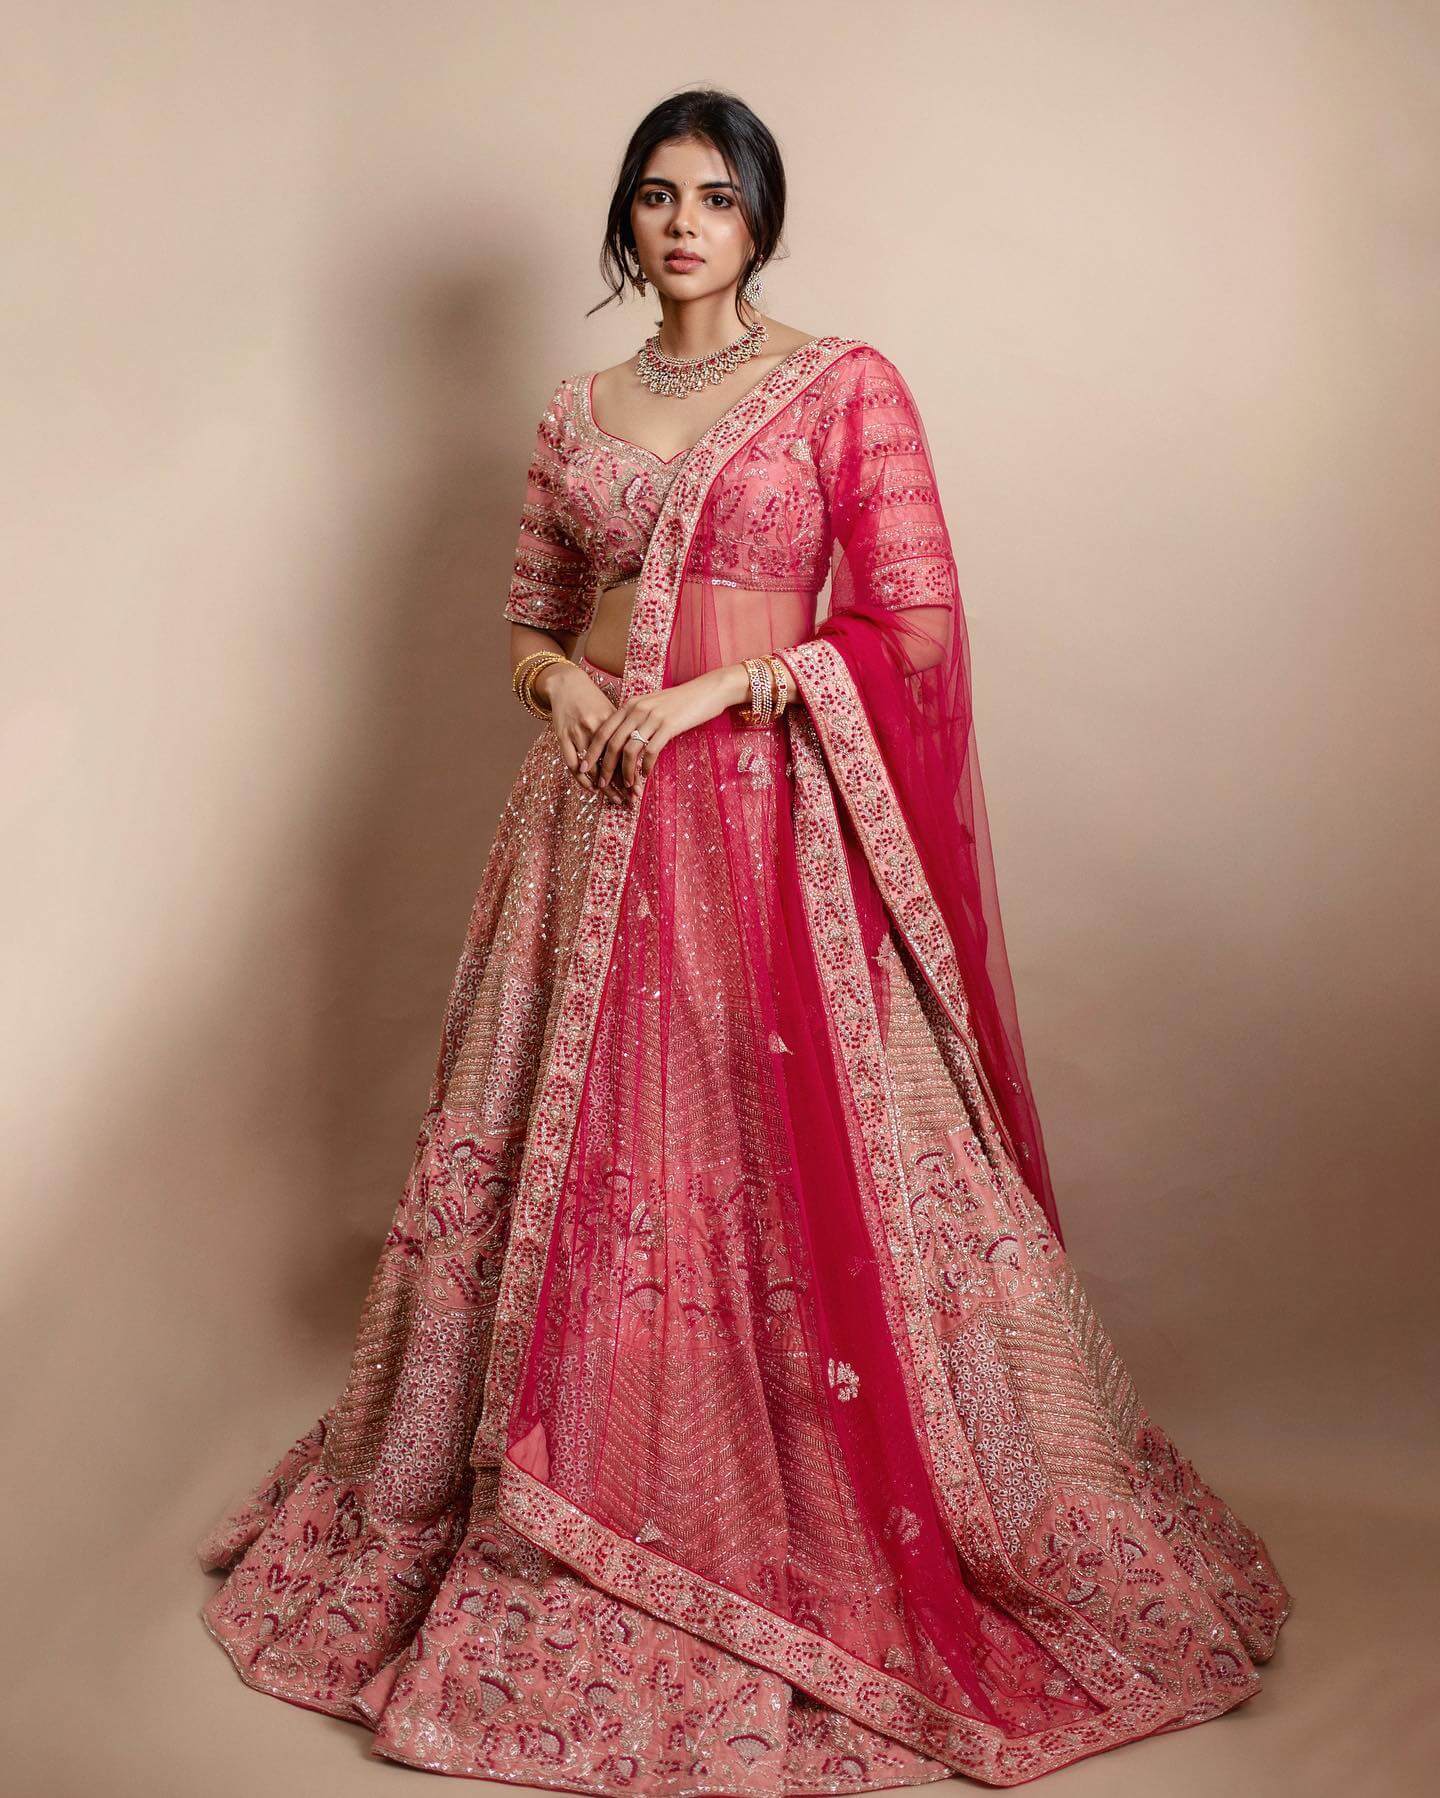 Kalyani Priyadarshan Splendid Outfits Looks In Pink Embroidered Lehenga